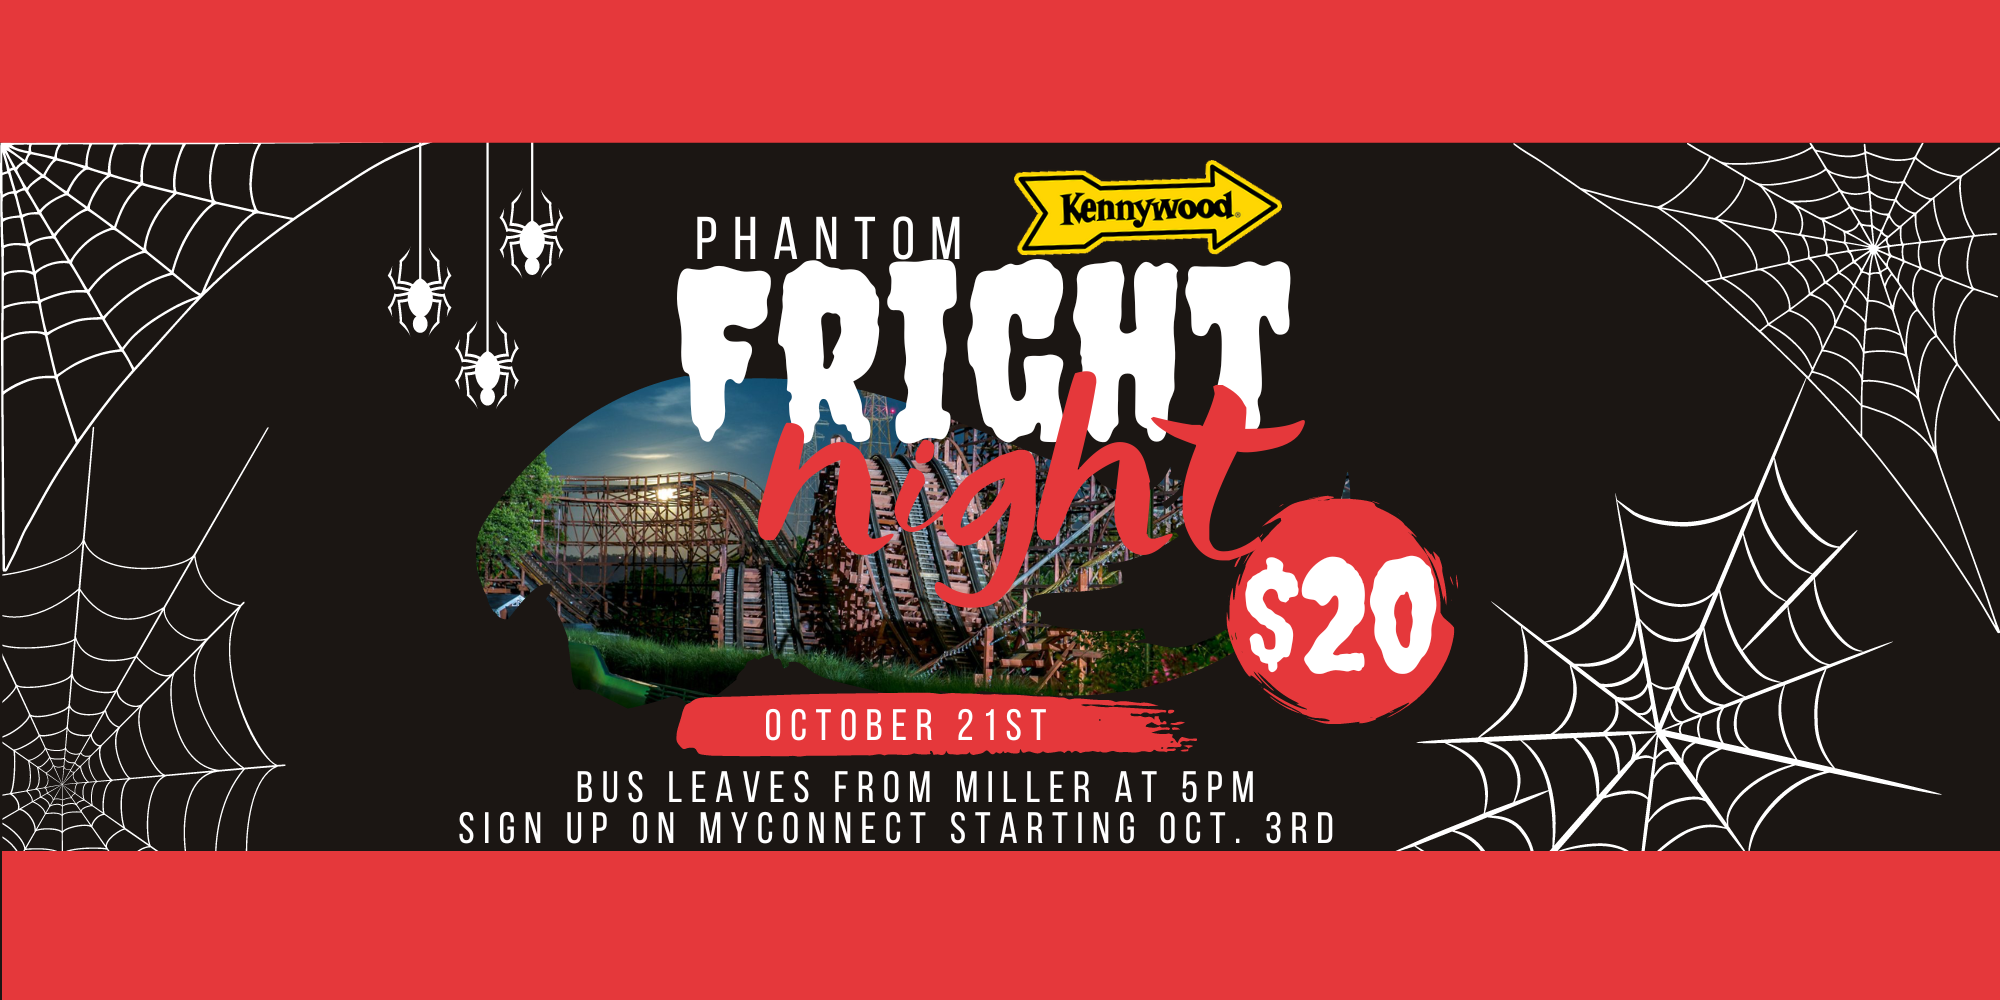 Waynesburg University Kennywood Phantom Fright Night